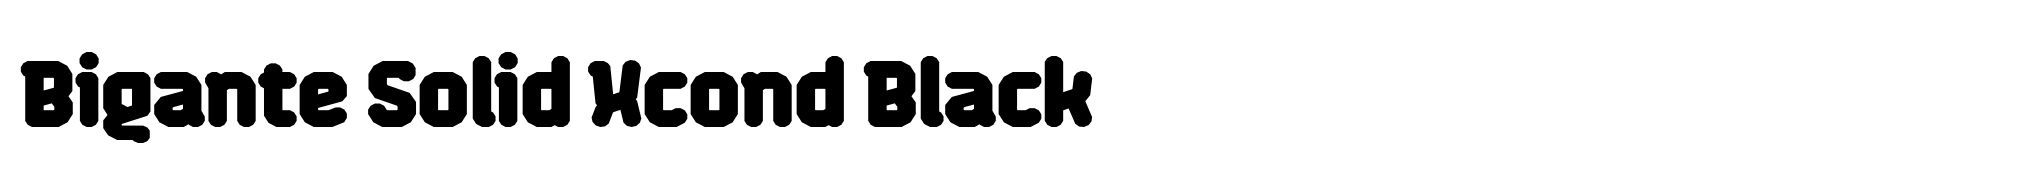 Bigante Solid Xcond Black image